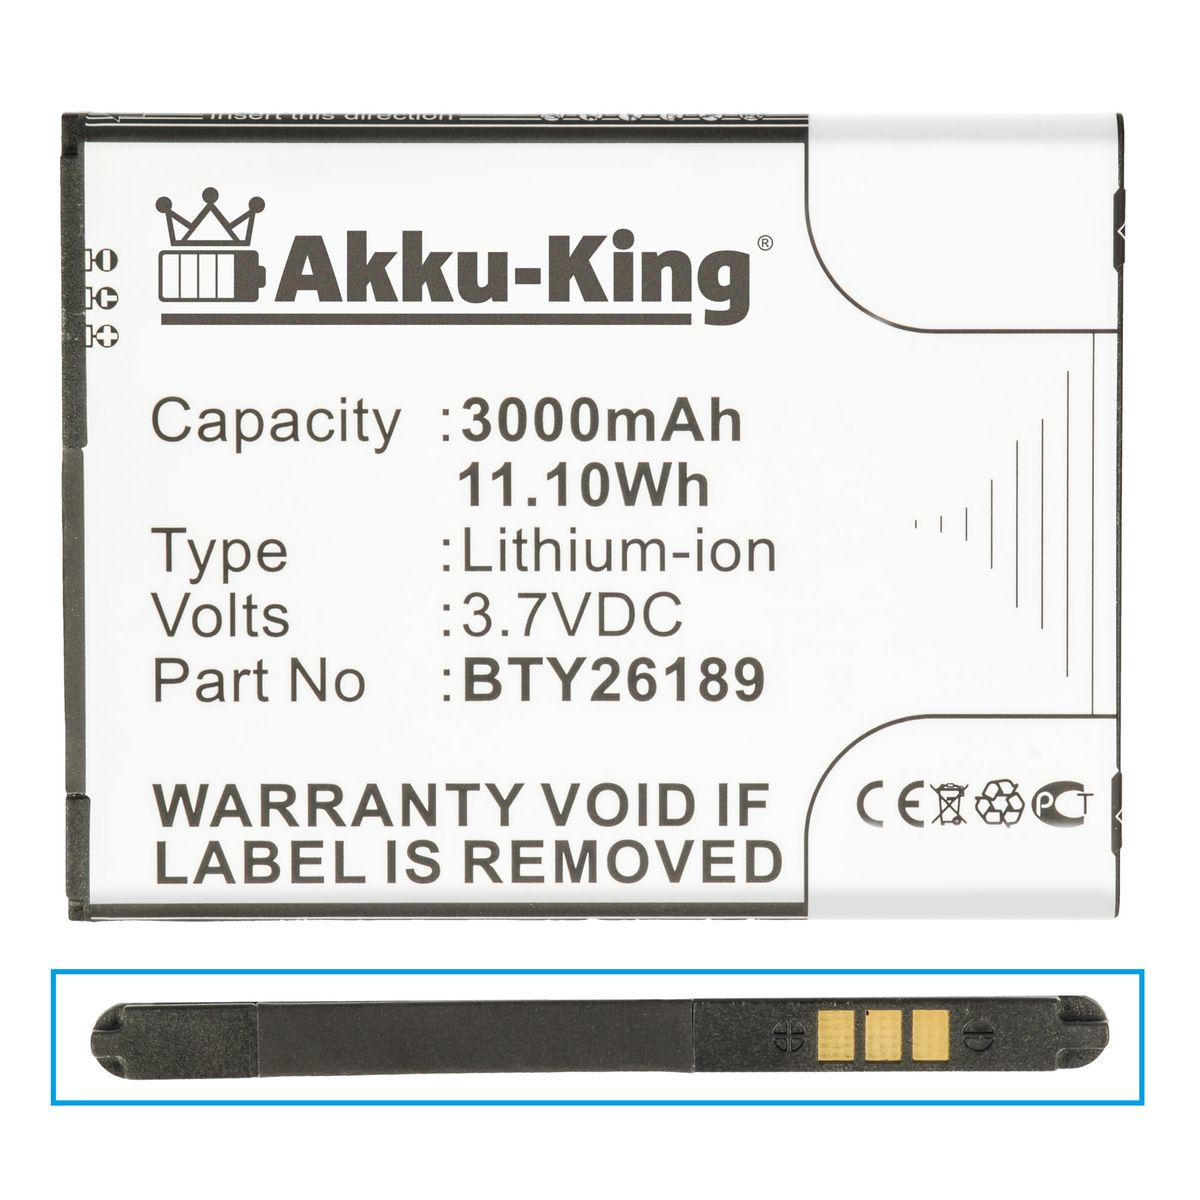 AKKU-KING Akku kompatibel 3000mAh Li-Ion Handy-Akku, mit Mobistel 3.7 BTY26189 Volt